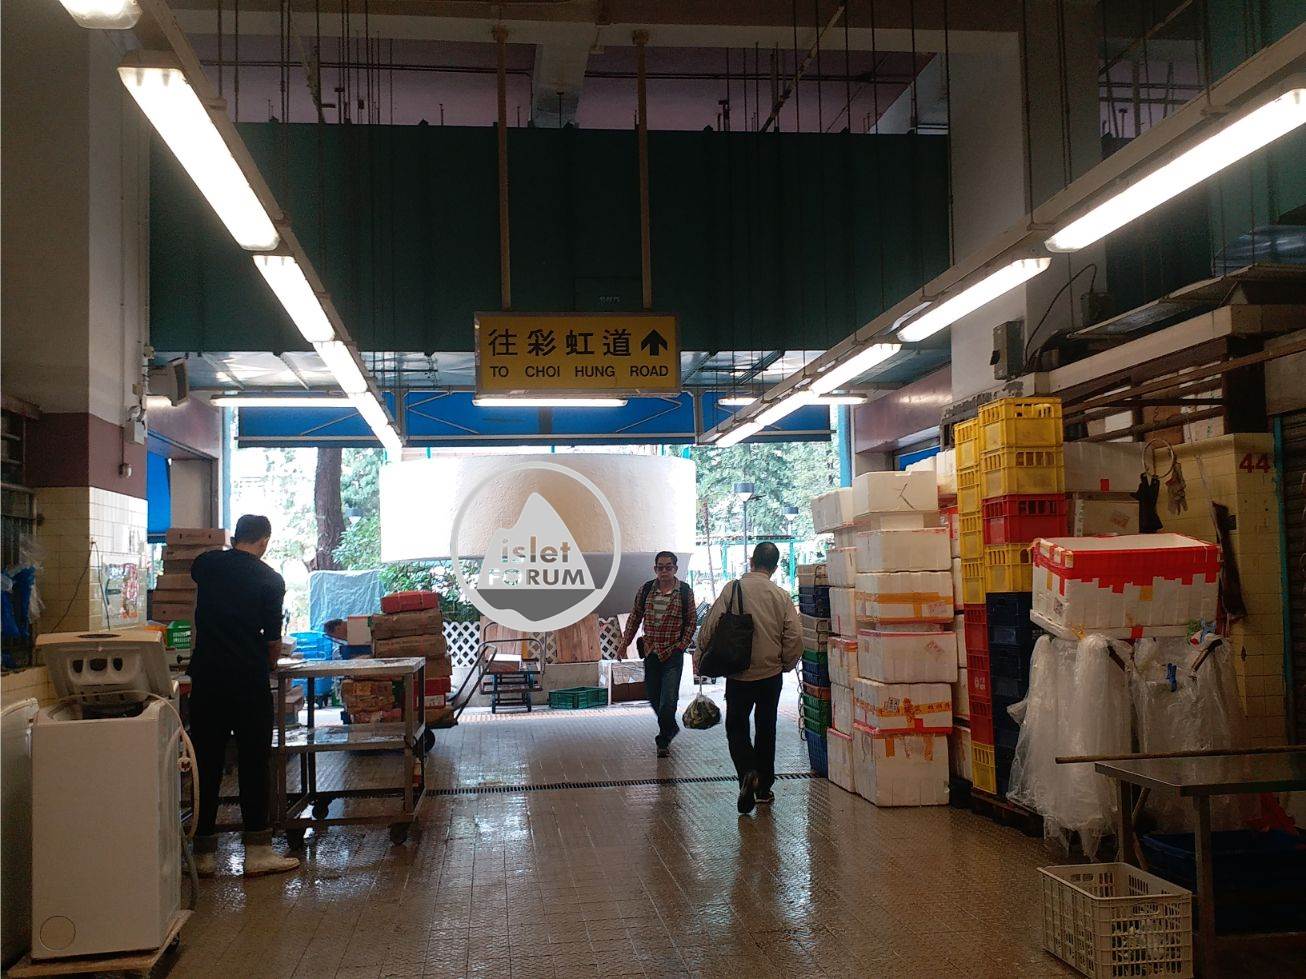 彩虹道街市choi hung road market (21).jpg